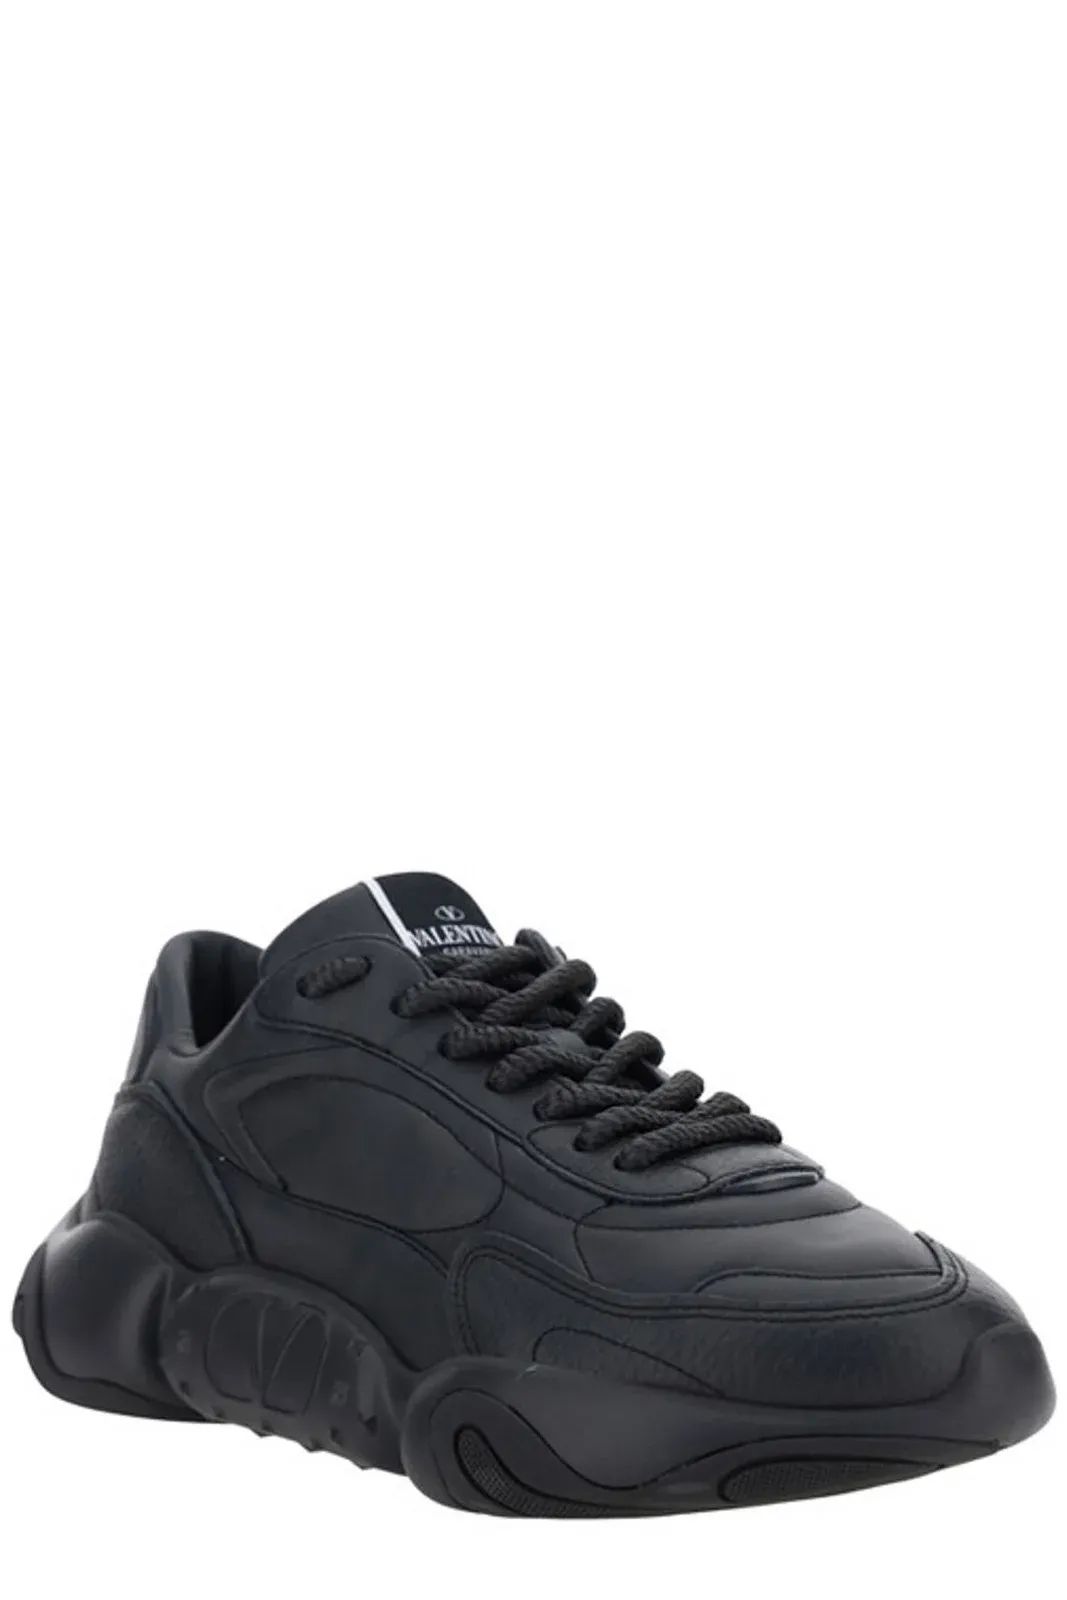 Valentino Black Calf Leather Garavani Sneakers | Fashionsarah.com